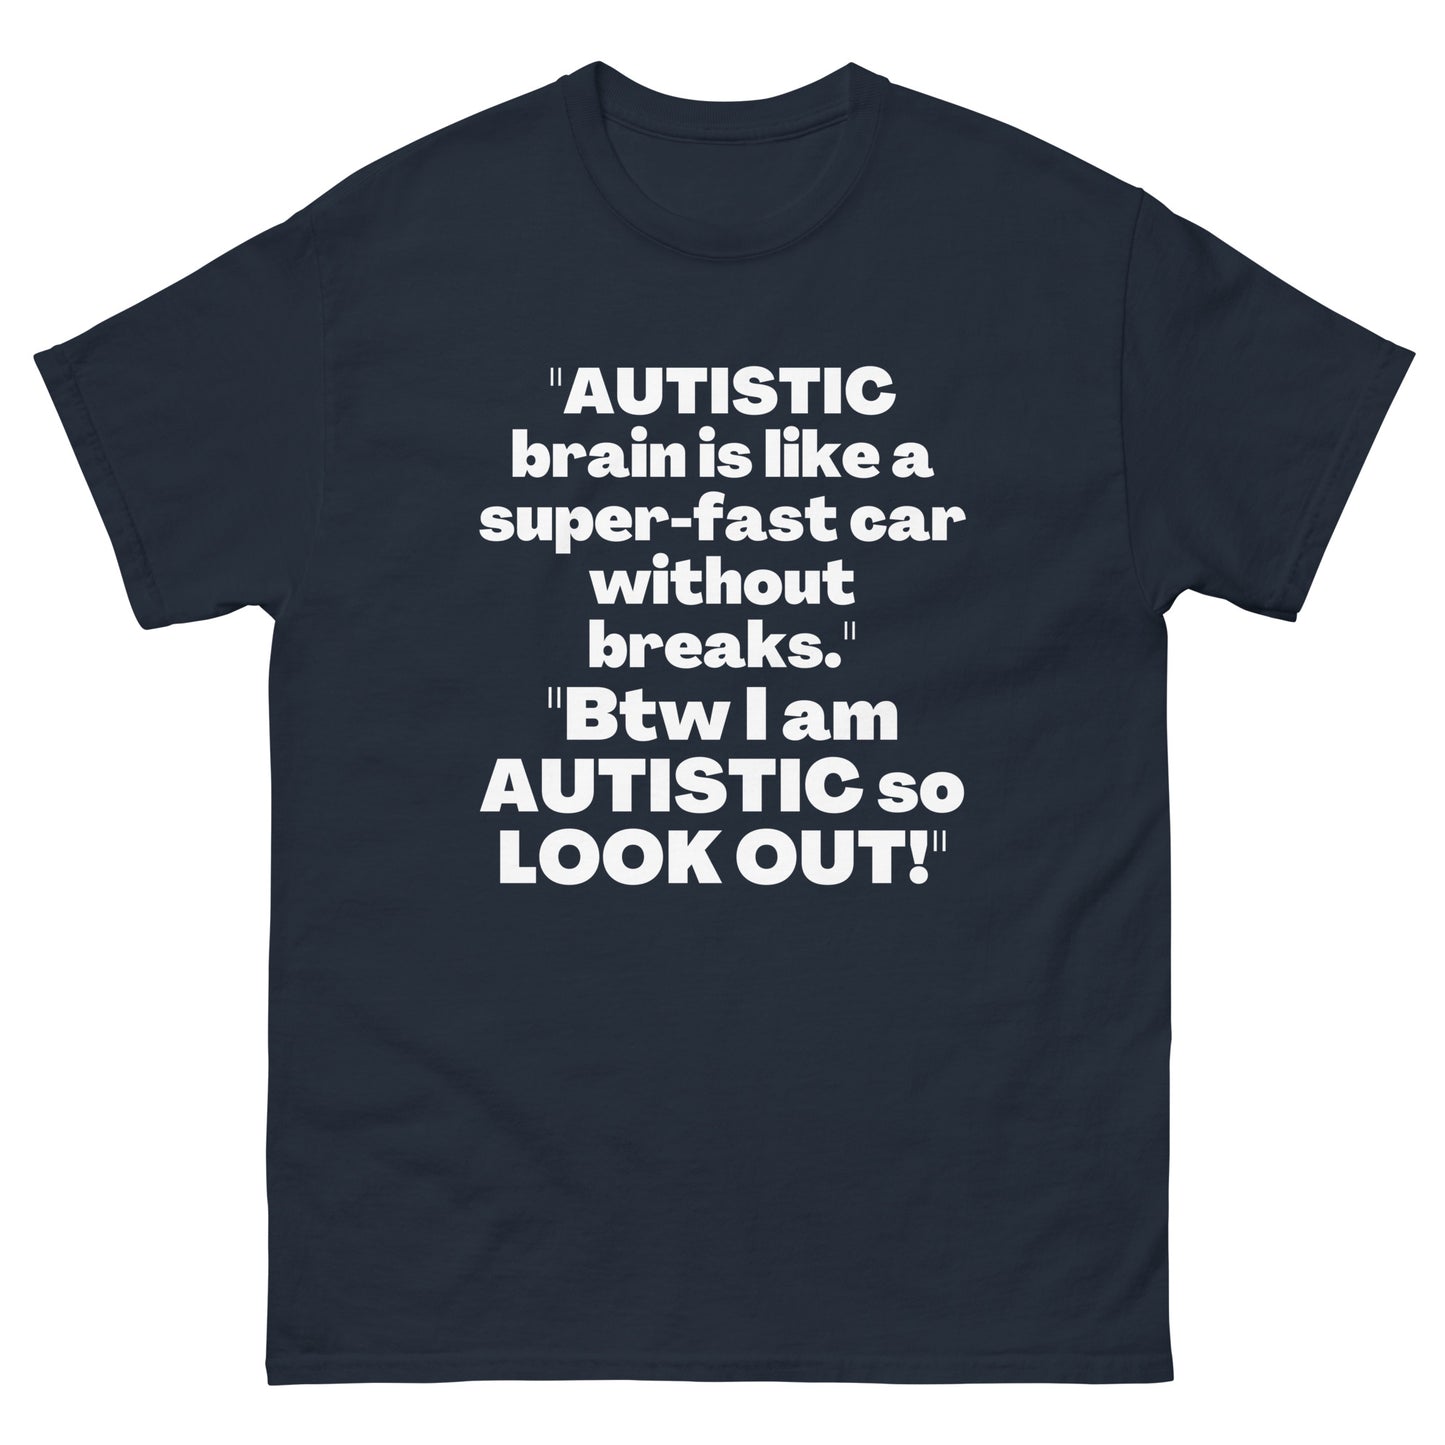 Autism awareness, Autistic, Autism spectrum disorder ASD, Autism support, Autism quote, Neurodiversity, Autistic support, Autism Gift Short-Sleeve Unisex T-Shirt.